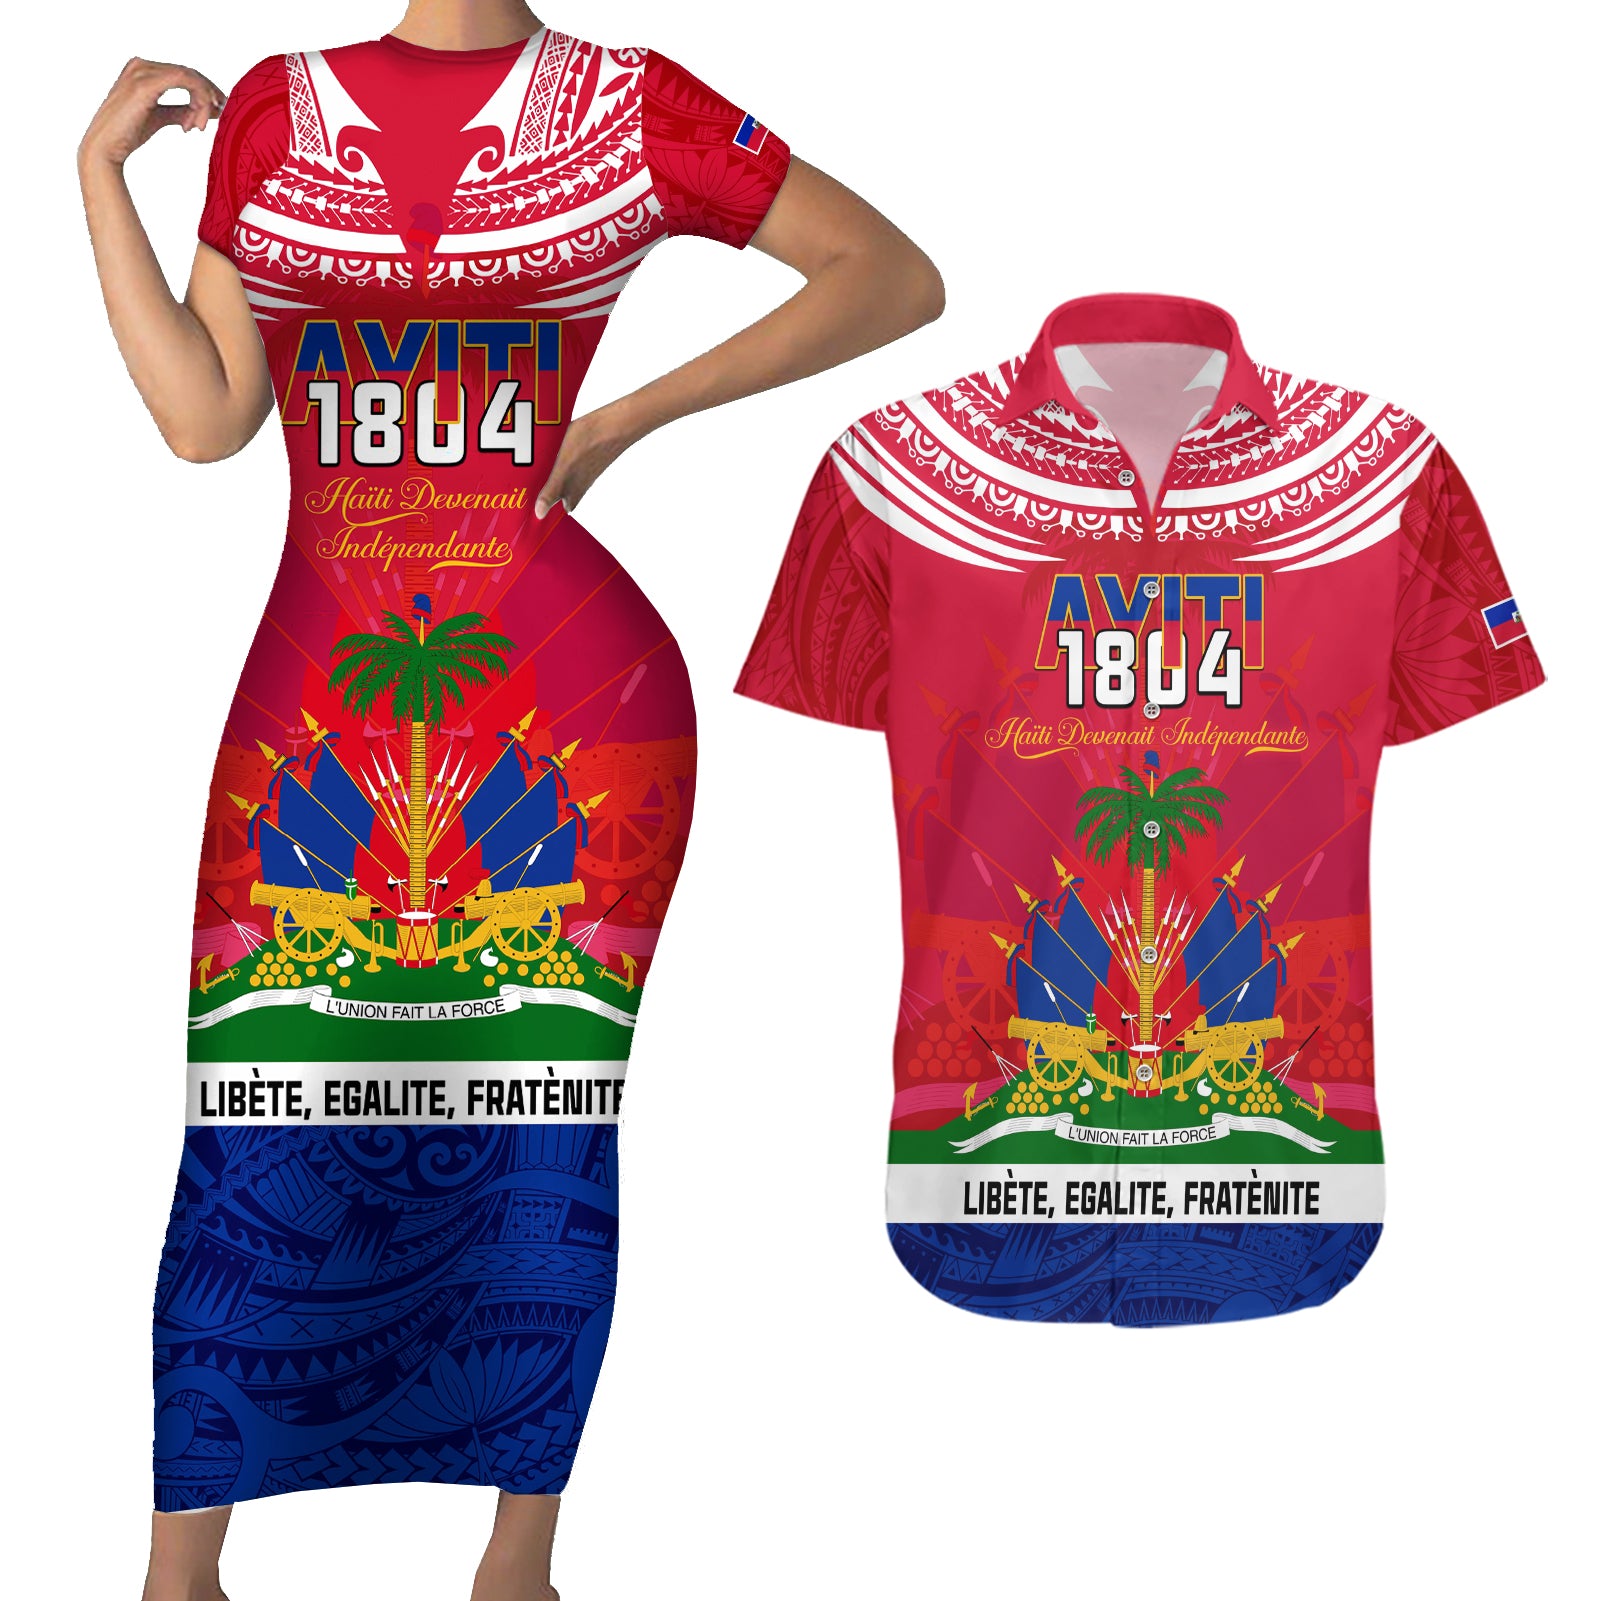 haiti-independence-day-couples-matching-short-sleeve-bodycon-dress-and-hawaiian-shirt-libete-egalite-fratenite-ayiti-1804-with-polynesian-pattern